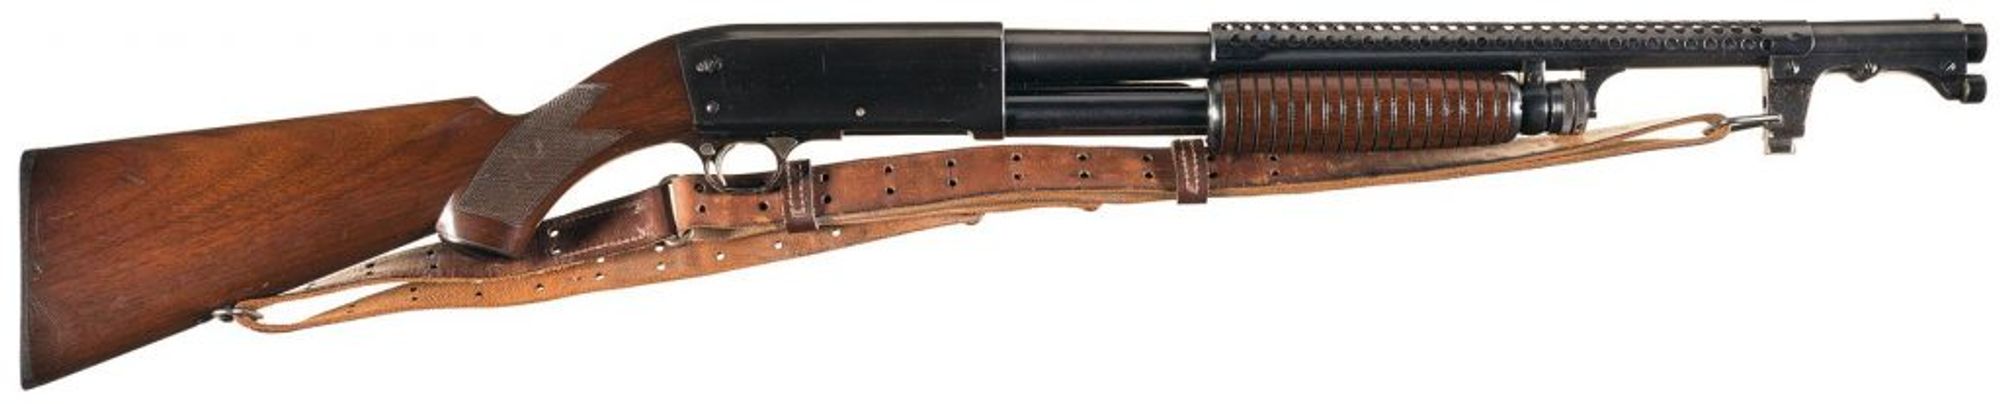 Ithaca Model 37 Trench shotgun